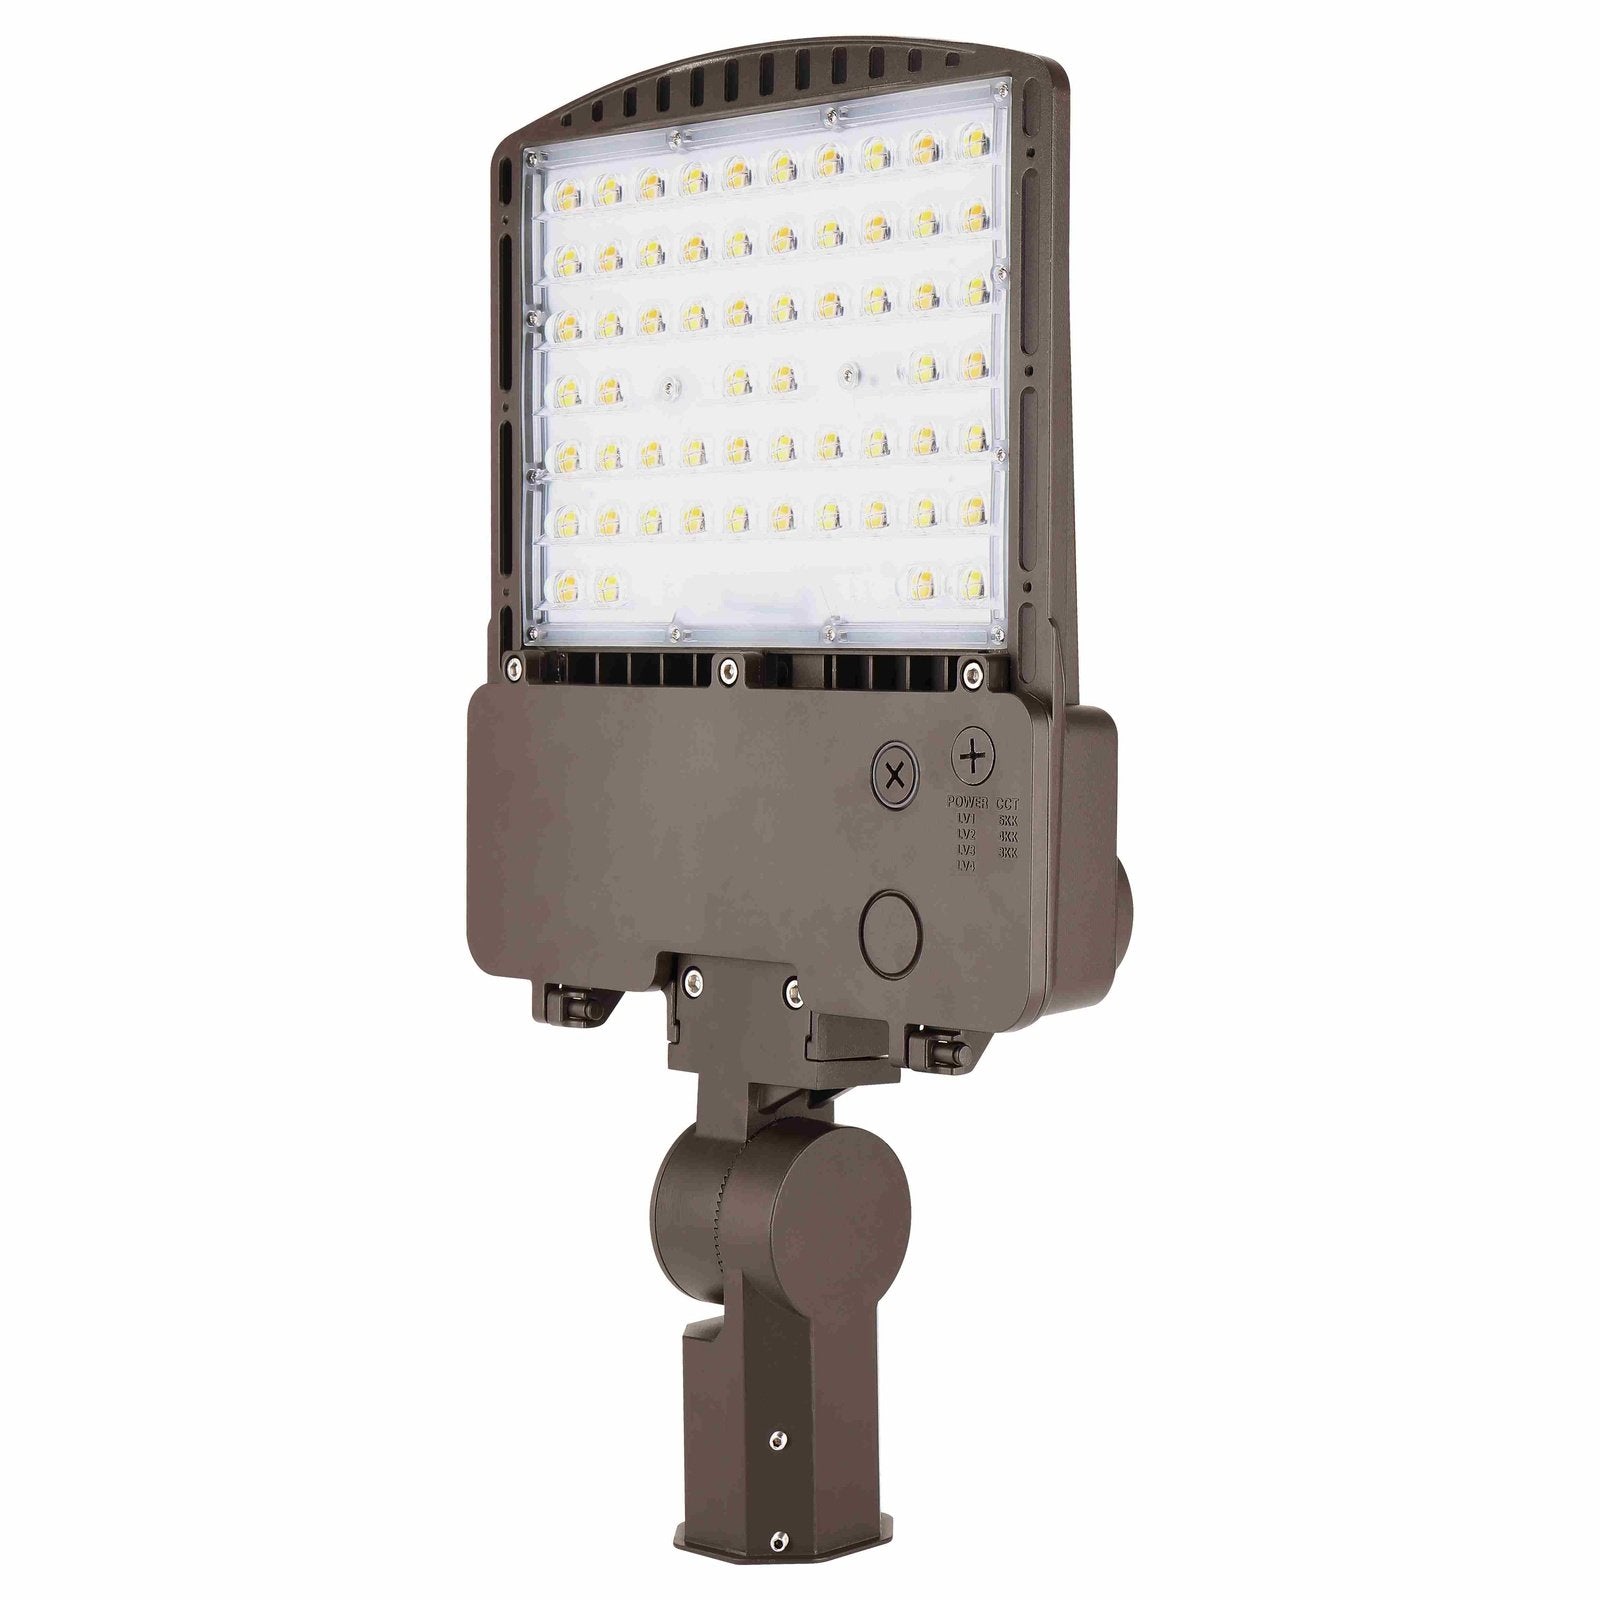 AL08 LED Area Flood Light 140W, 120-277V, Type 3, 5000K/4000K/3000K CCT and Power Adjustable - Dark Bronze